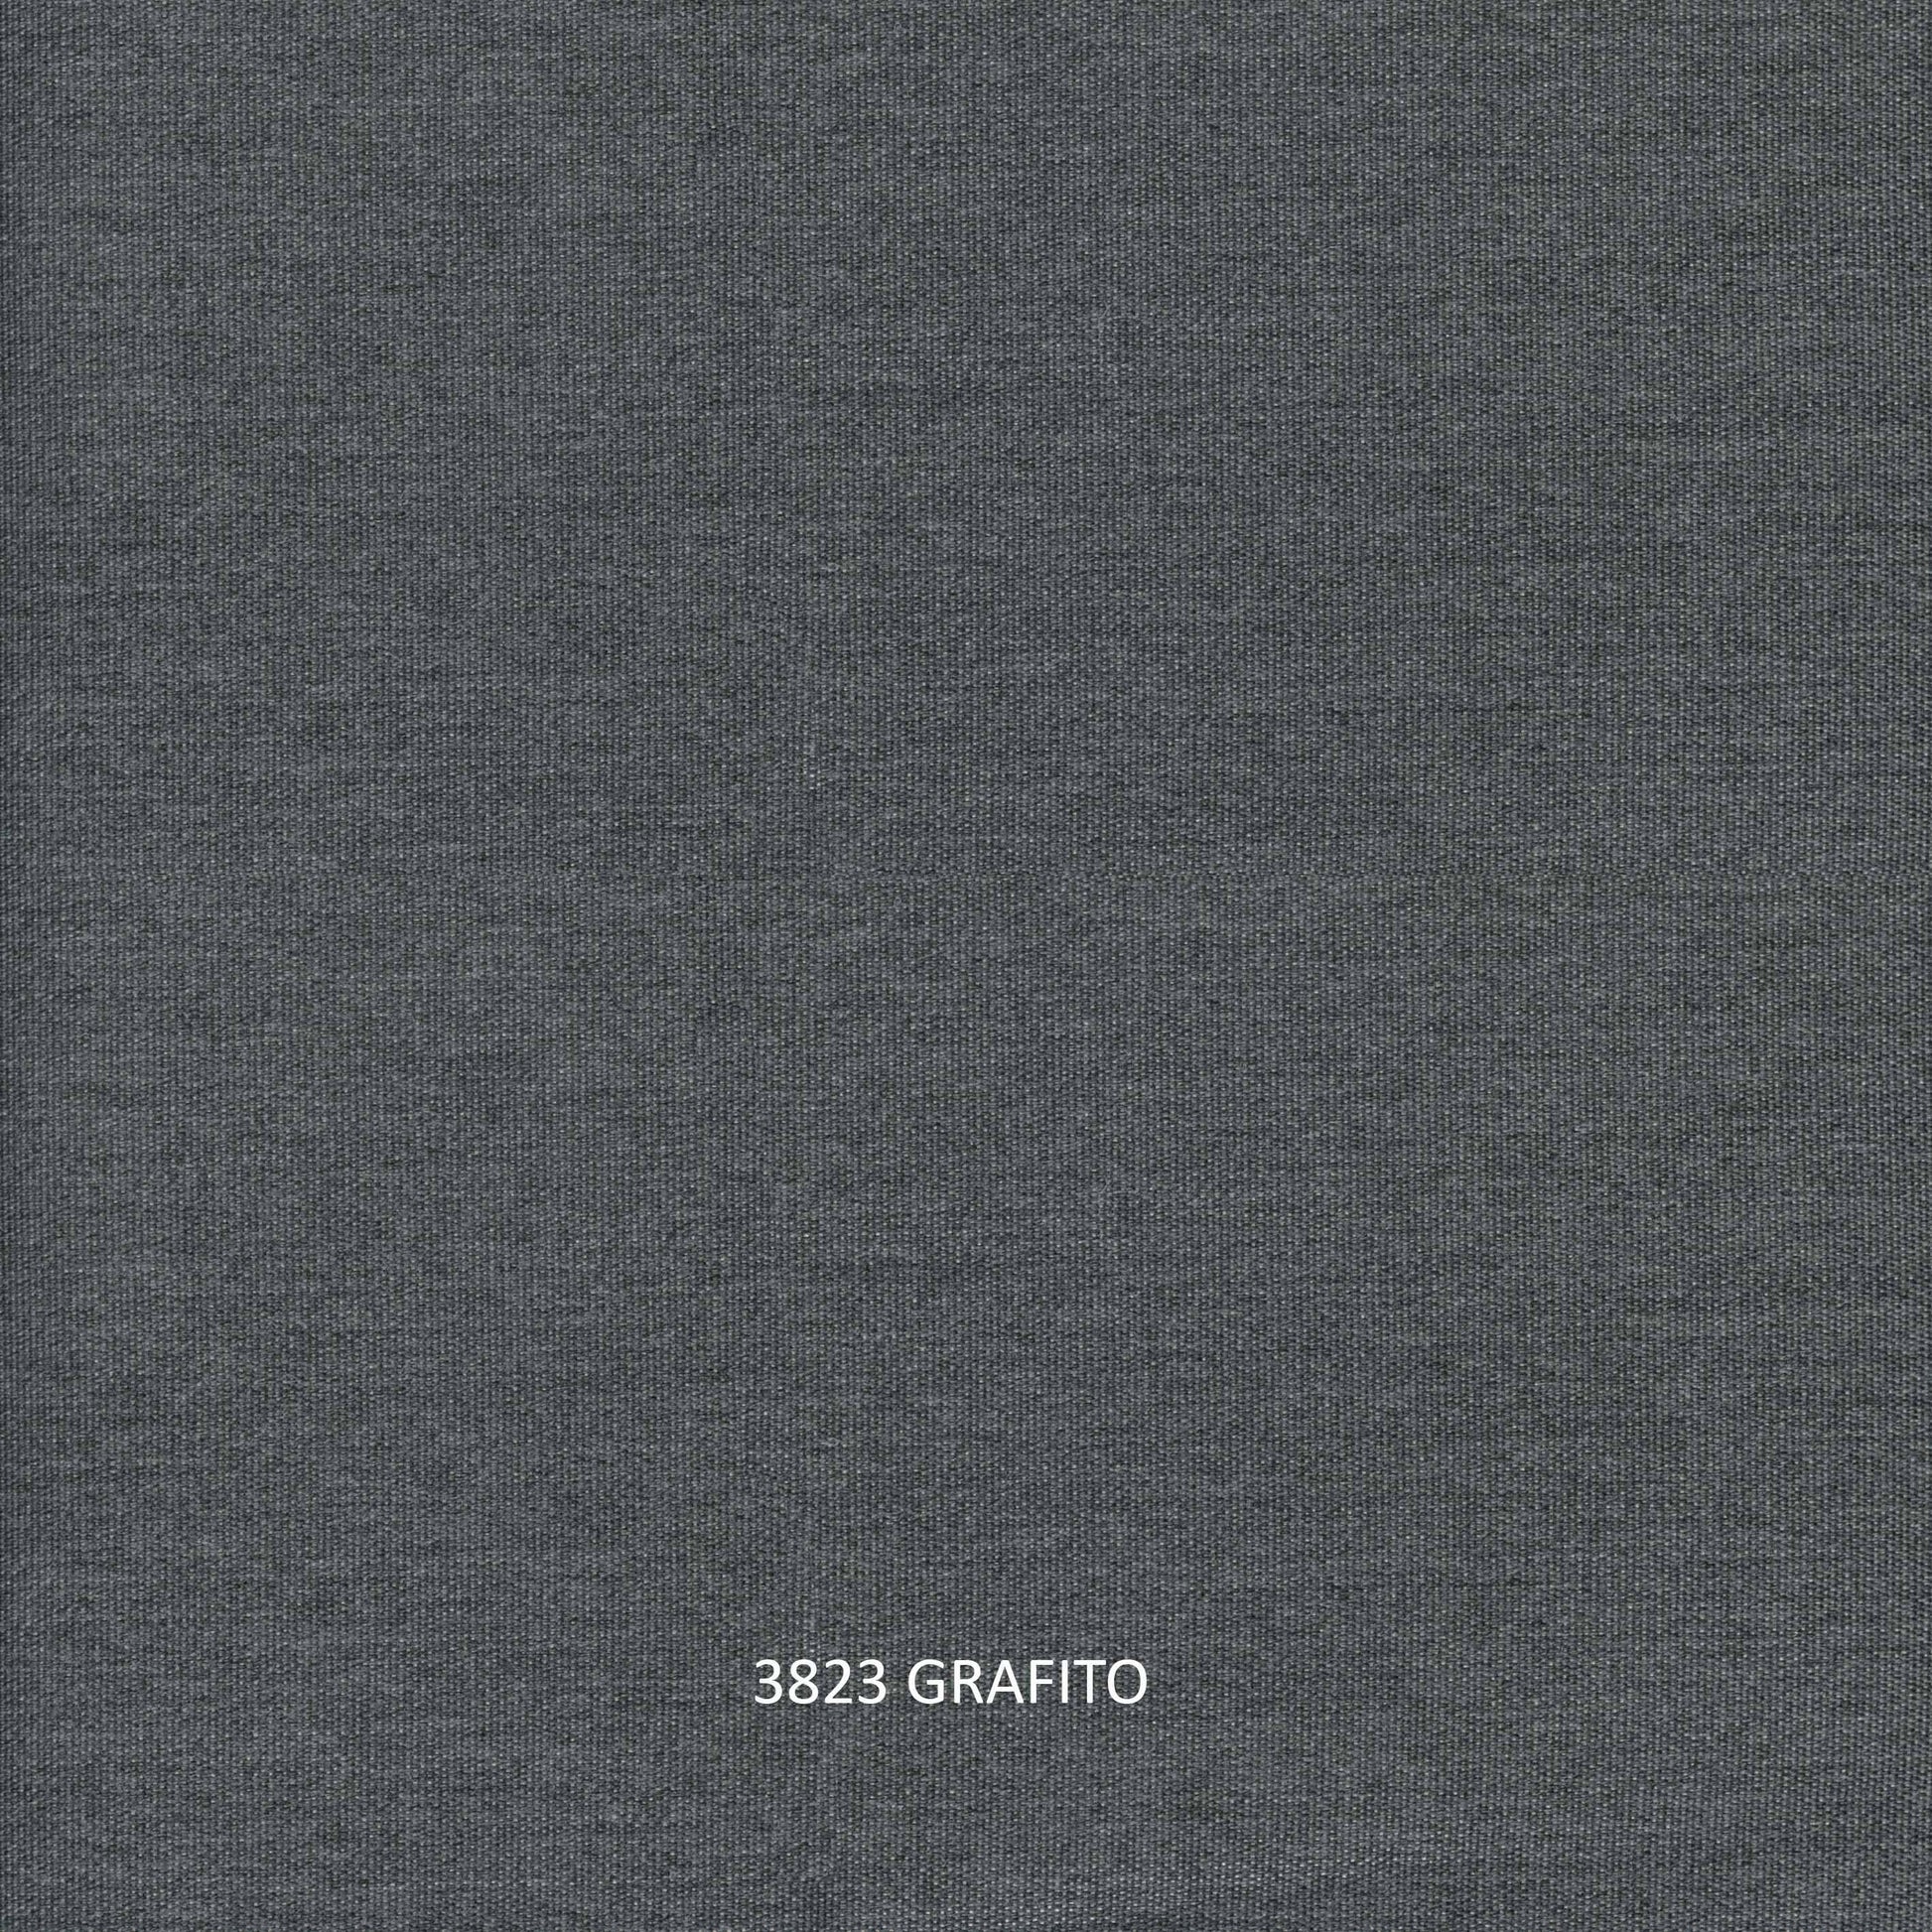 Brando Sea Shell Love Seat - PadioLiving - Brando Sea Shell Love Seat - Outdoor Love Seat - Silver Walnut 30mm Weave-Grafito(£2225) - PadioLiving